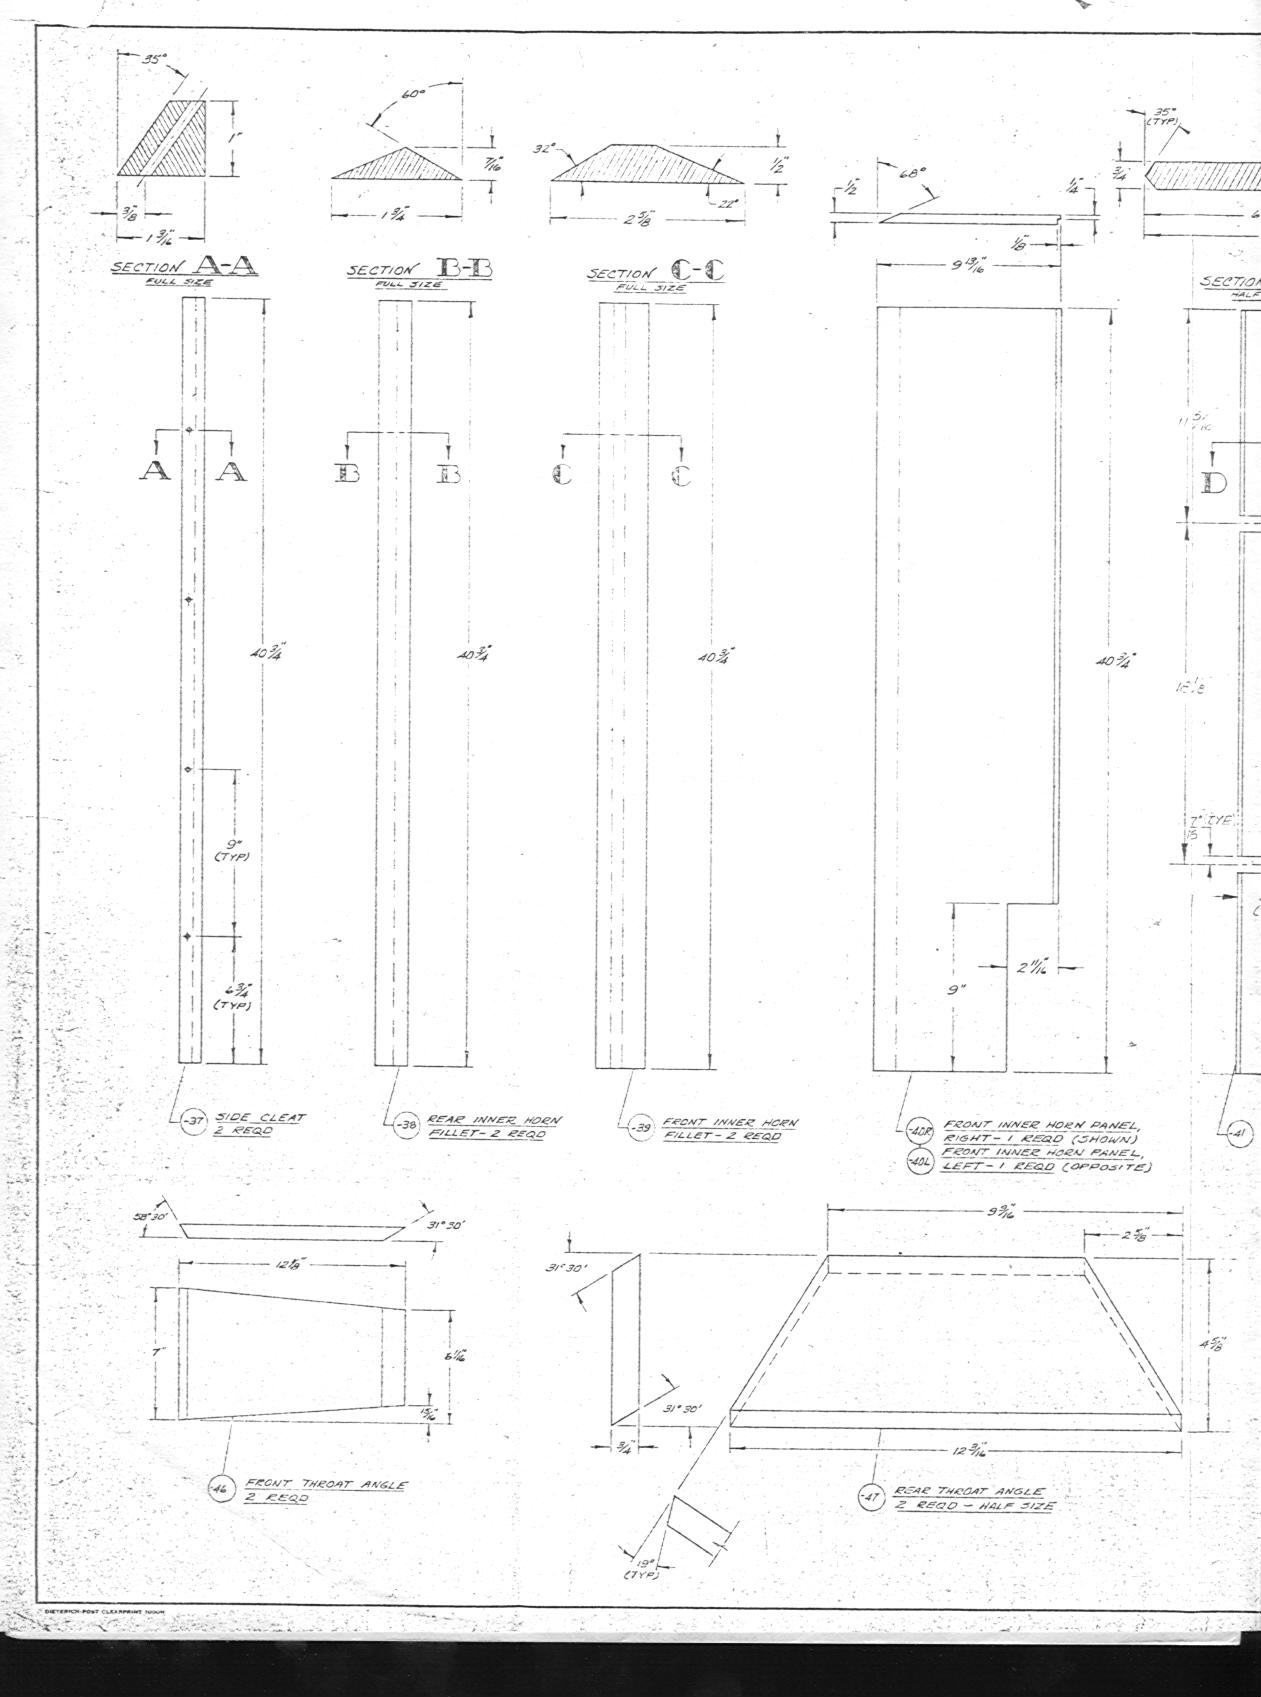 JBL - Hartsfield Cabinet - Drawing 7a